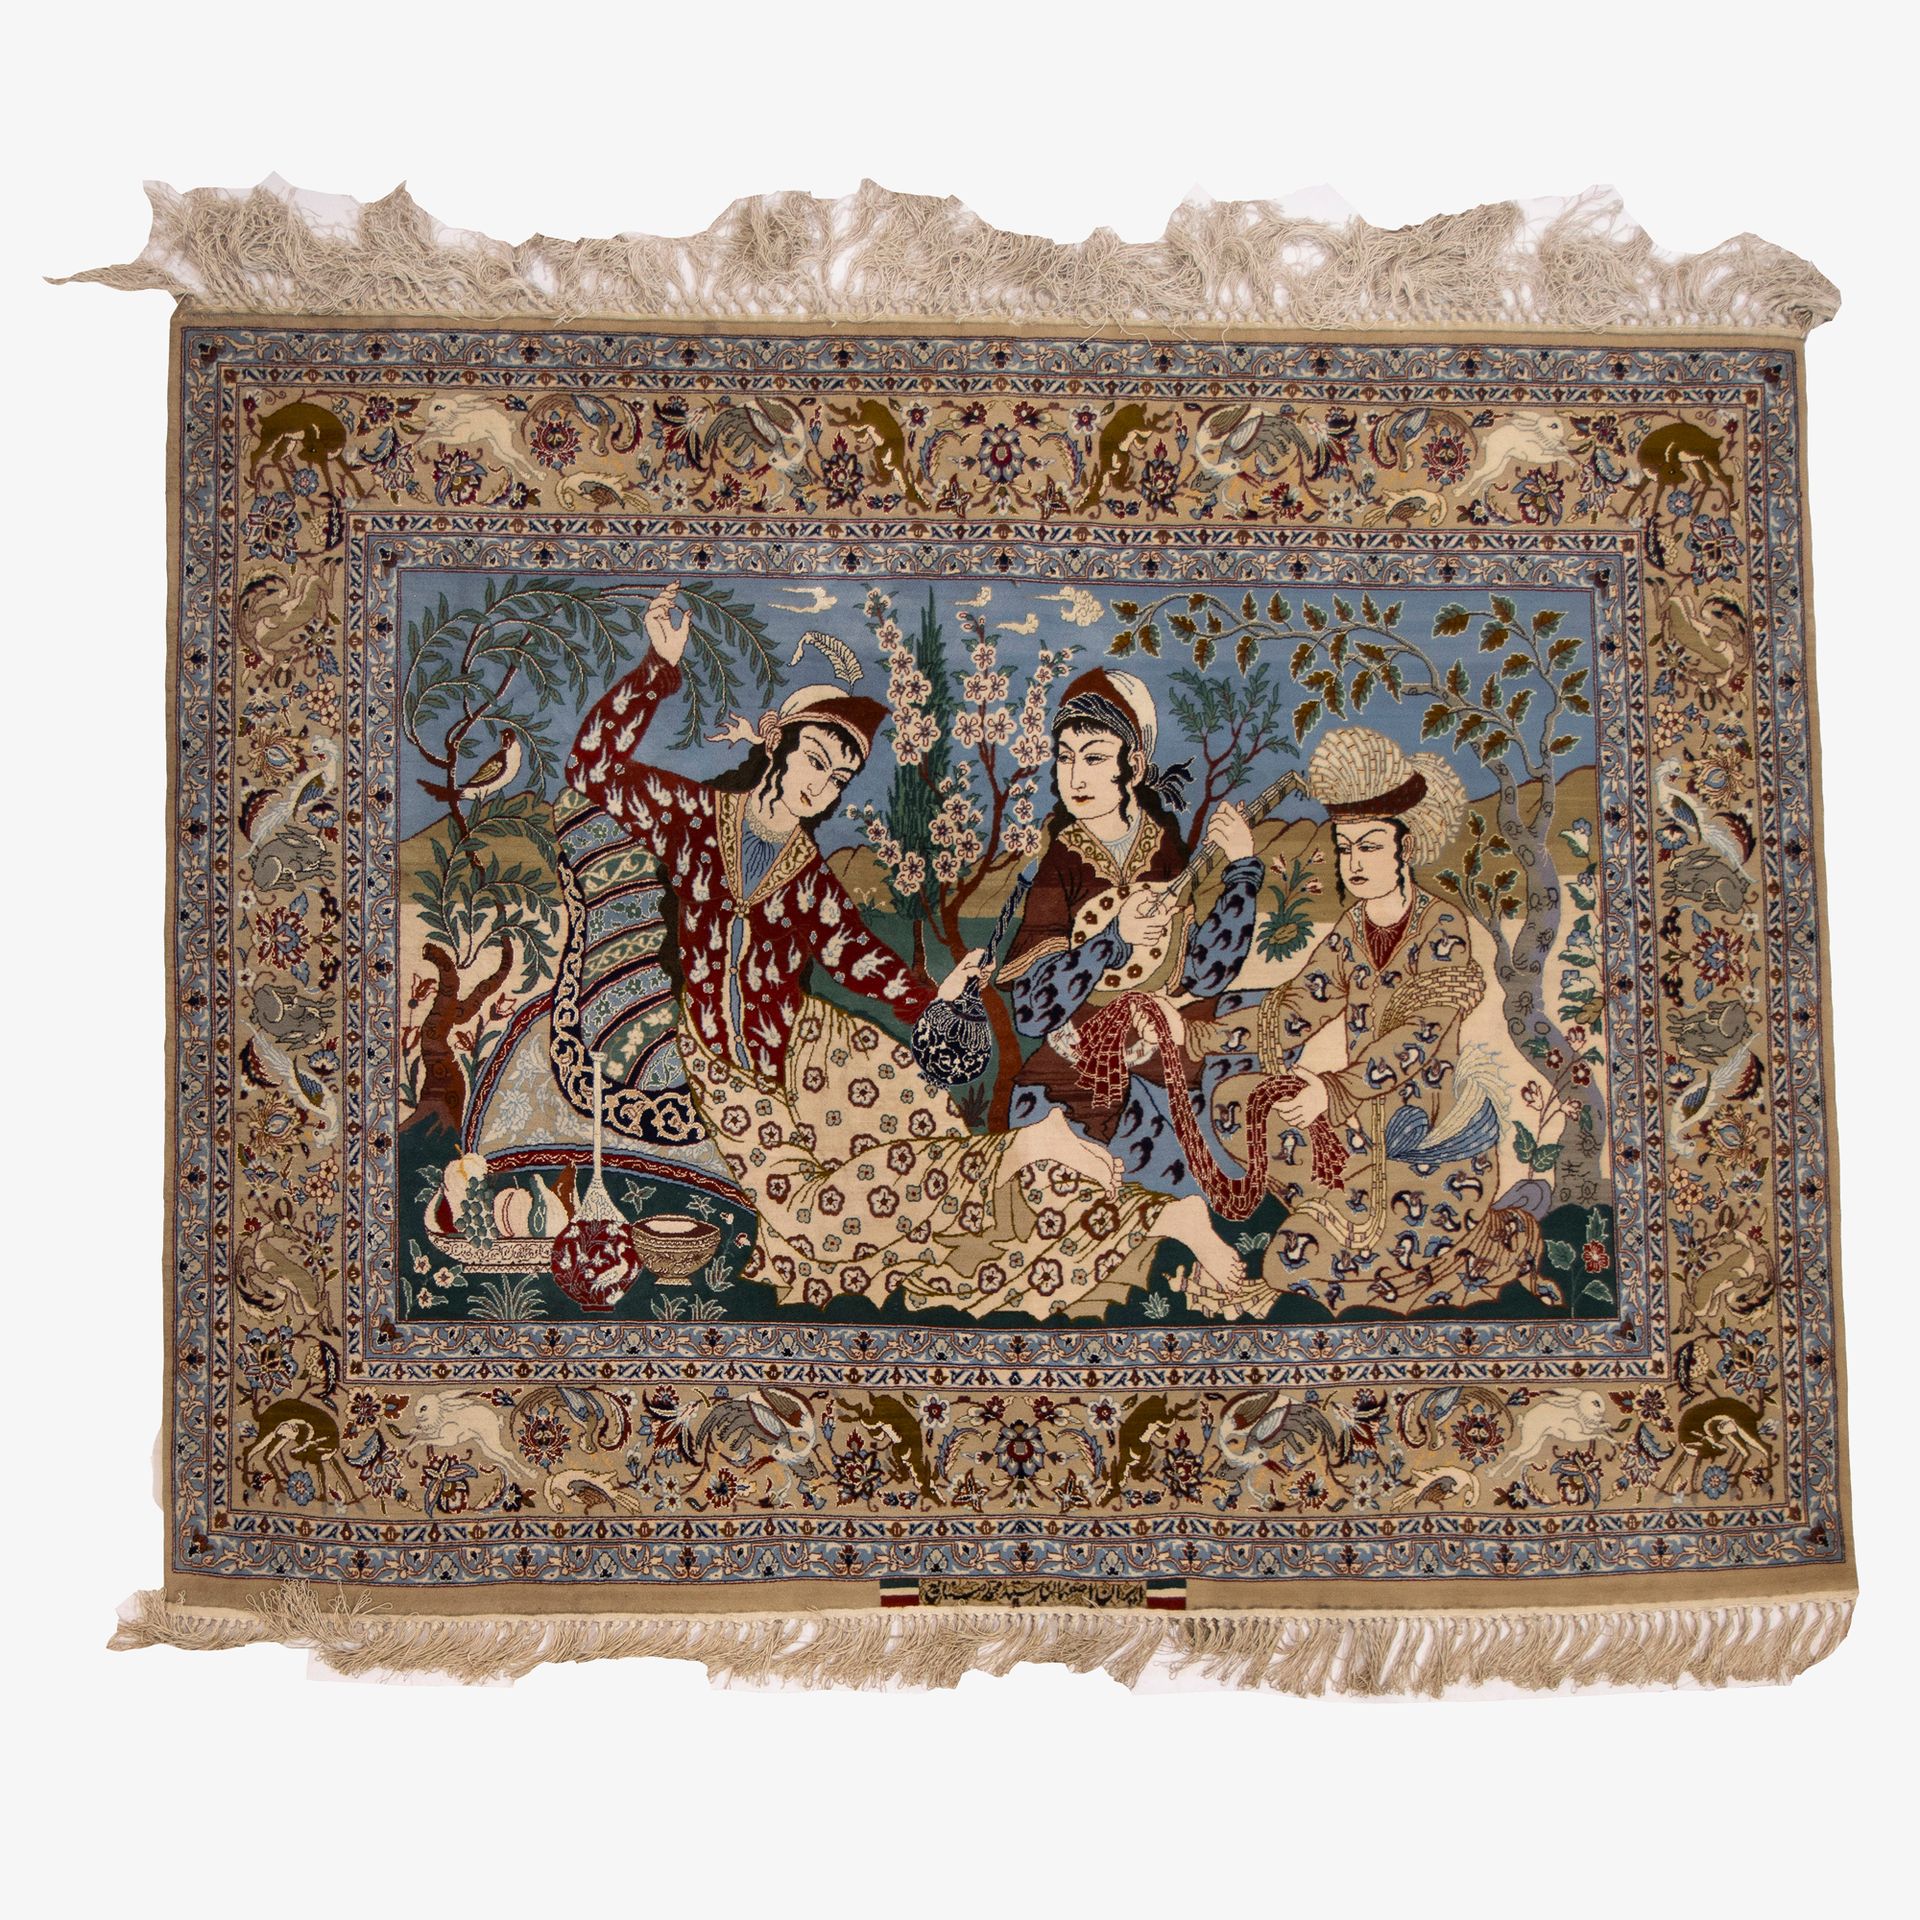 Null Tapisserie persane
Perzich wandtapijt
163,5 x 128 cm